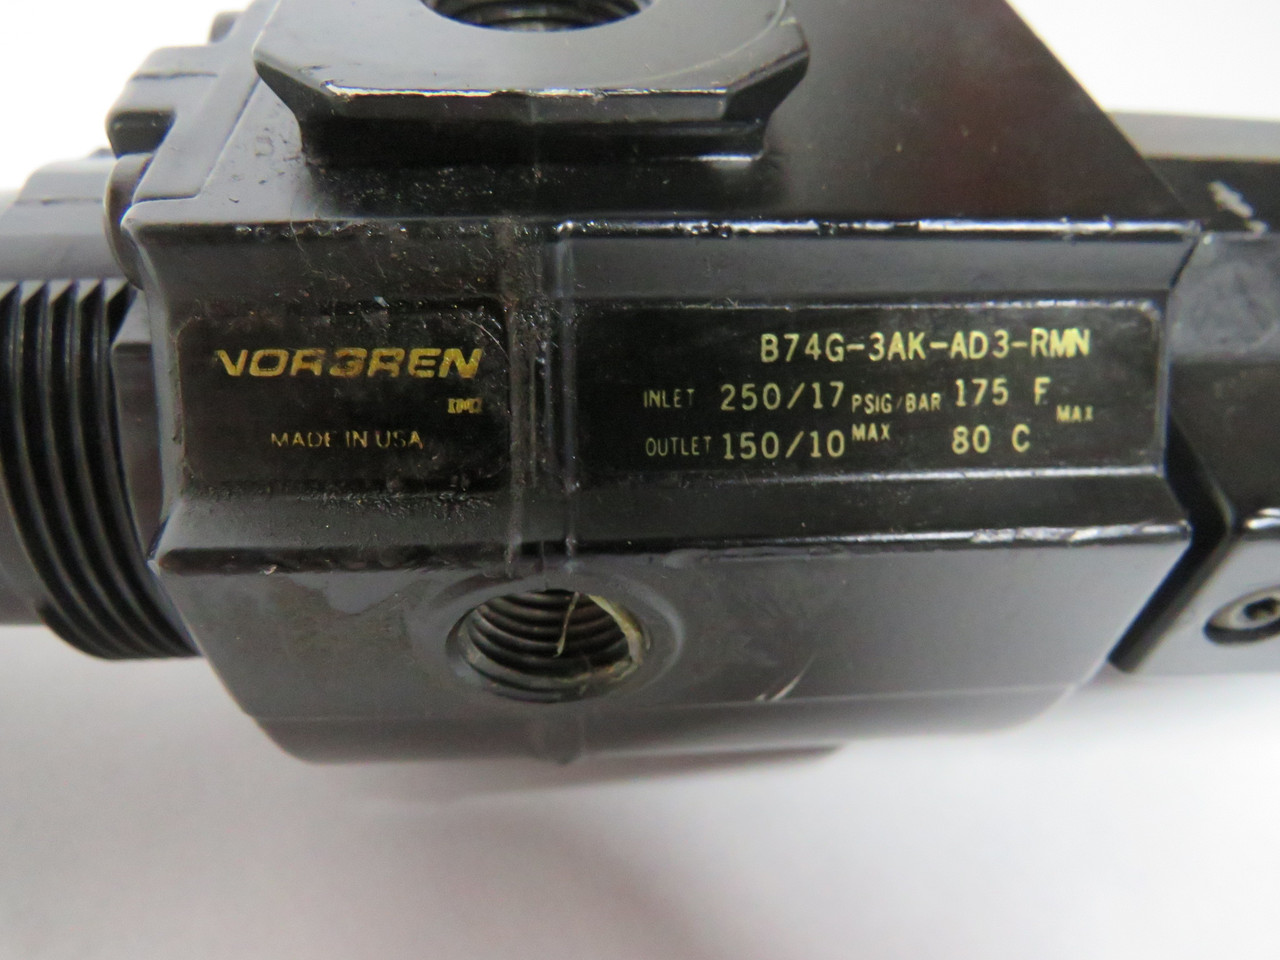 Norgren B74G-3AK-AD3-RMN Filter/Regulator 3/8 NPT COS DMG/MISSING HARDWARE USED